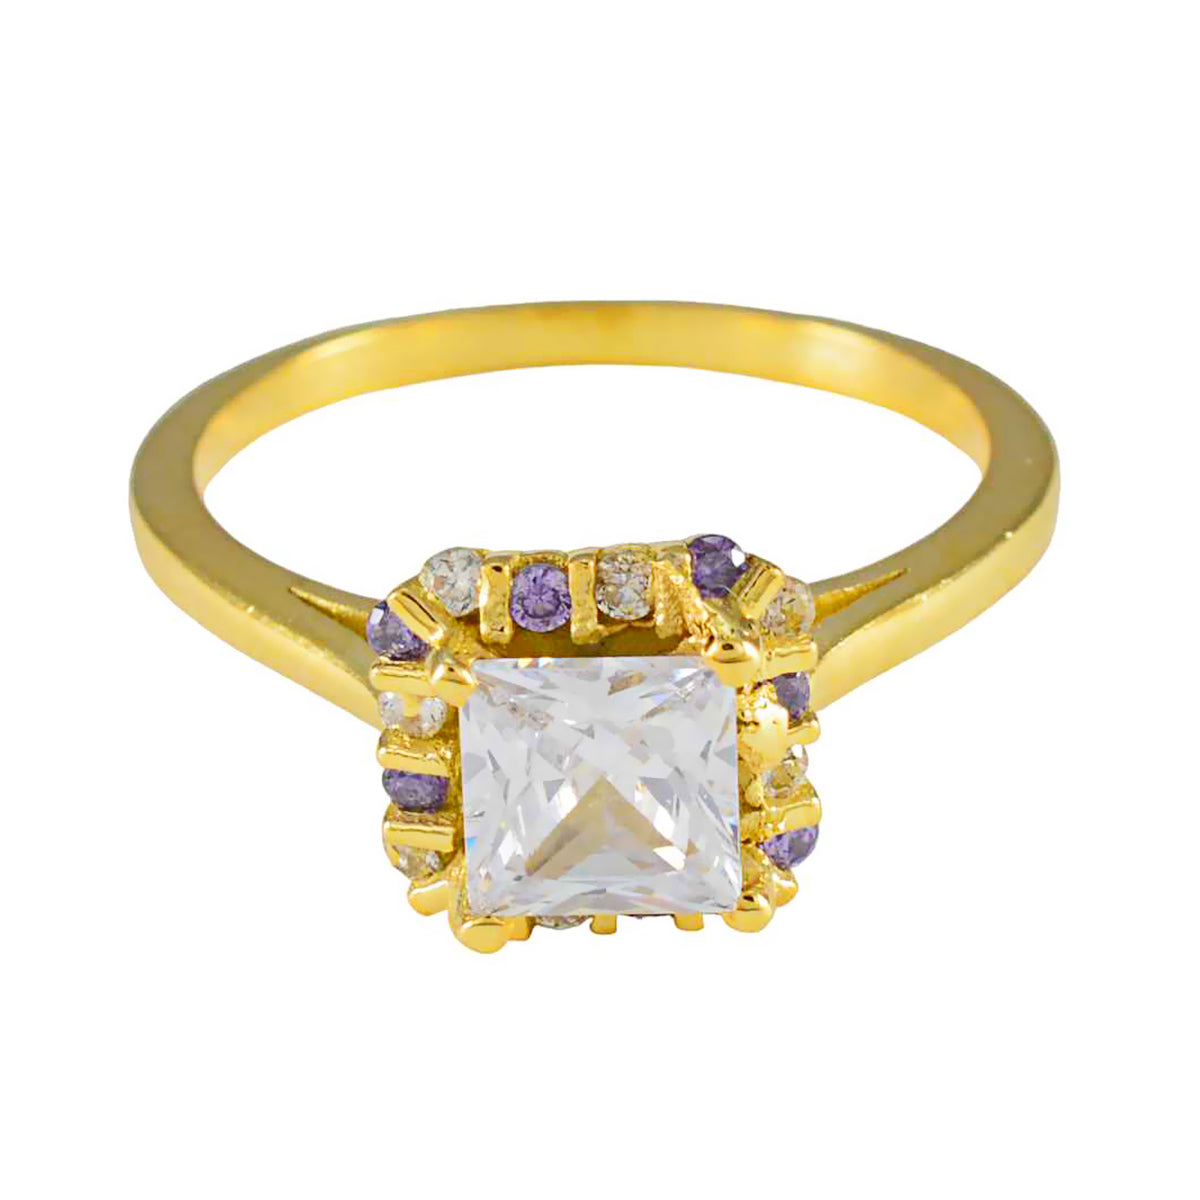 Riyo elegante zilveren ring met geelgouden amethiststeen vierkante vorm Prong-instelling Handamde sieraden trouwring